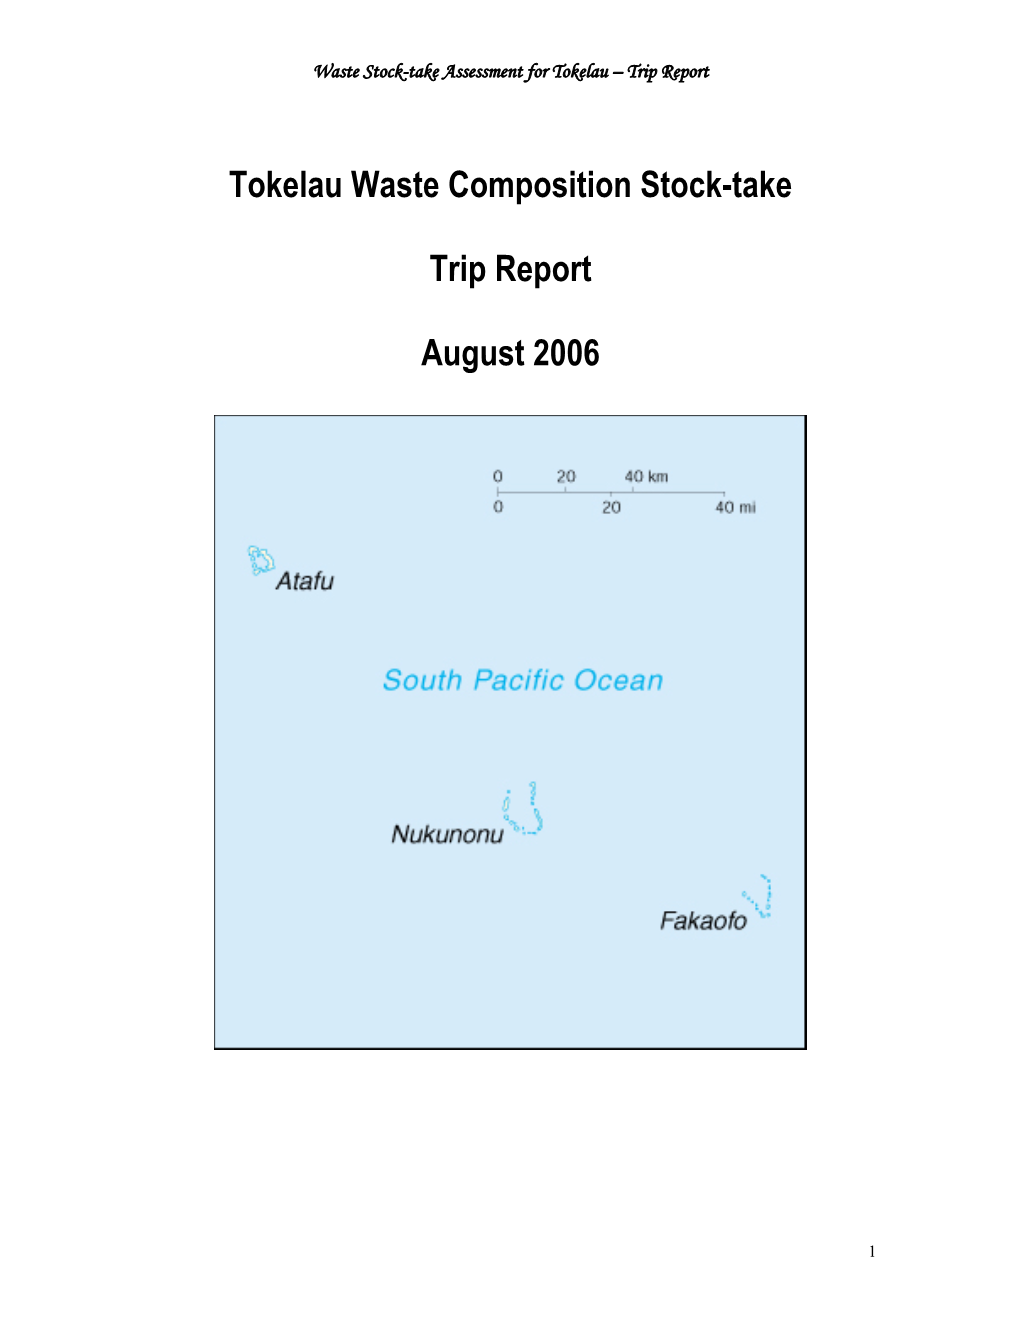 The Tokelau Community Waste Management Project